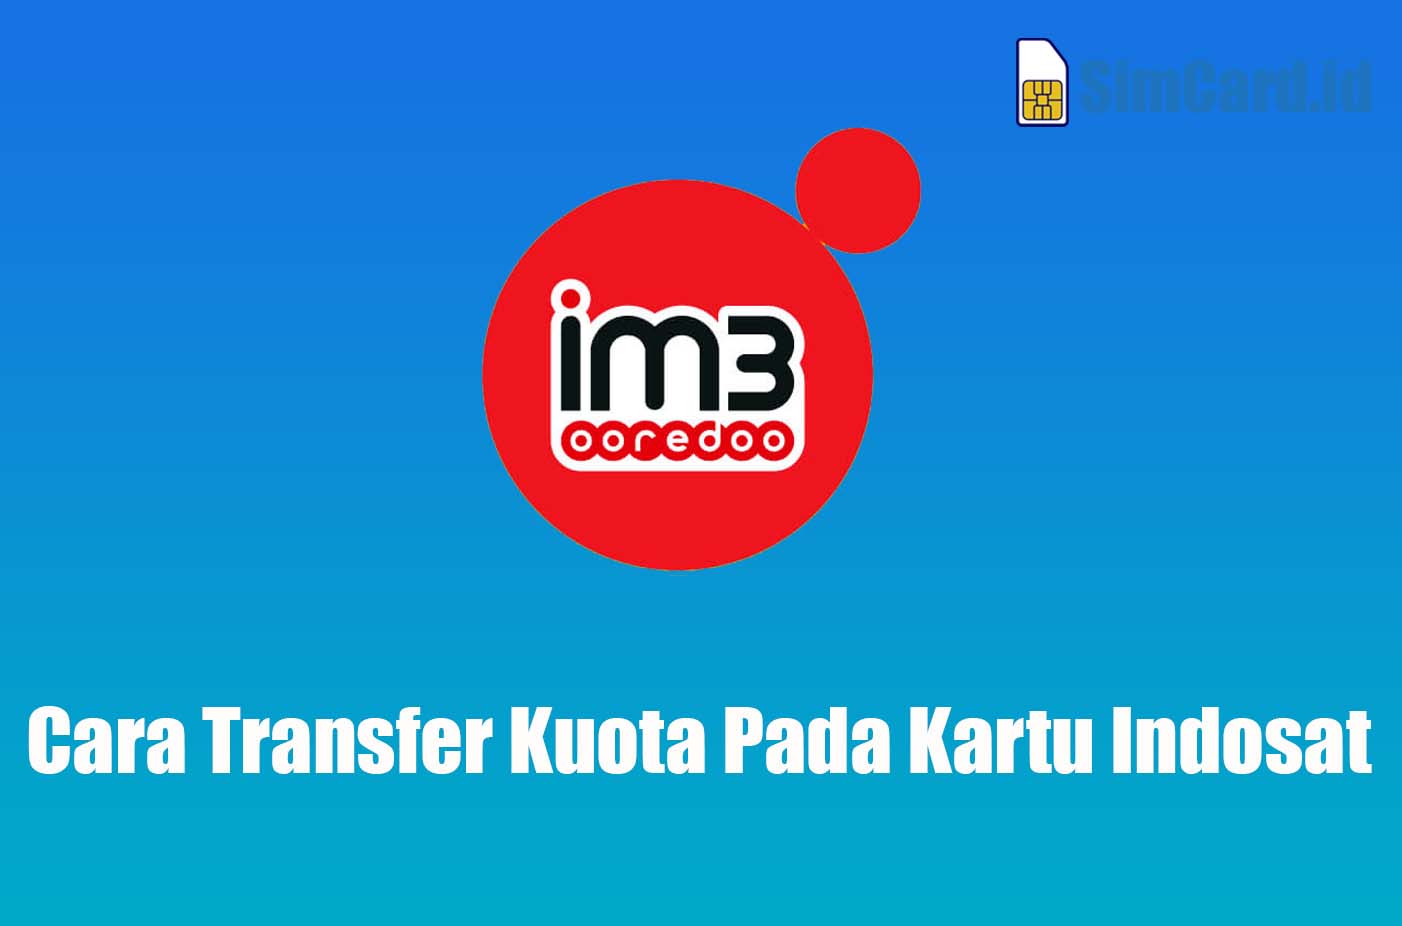 Cara Transfer Kuota Pada Kartu Indosat